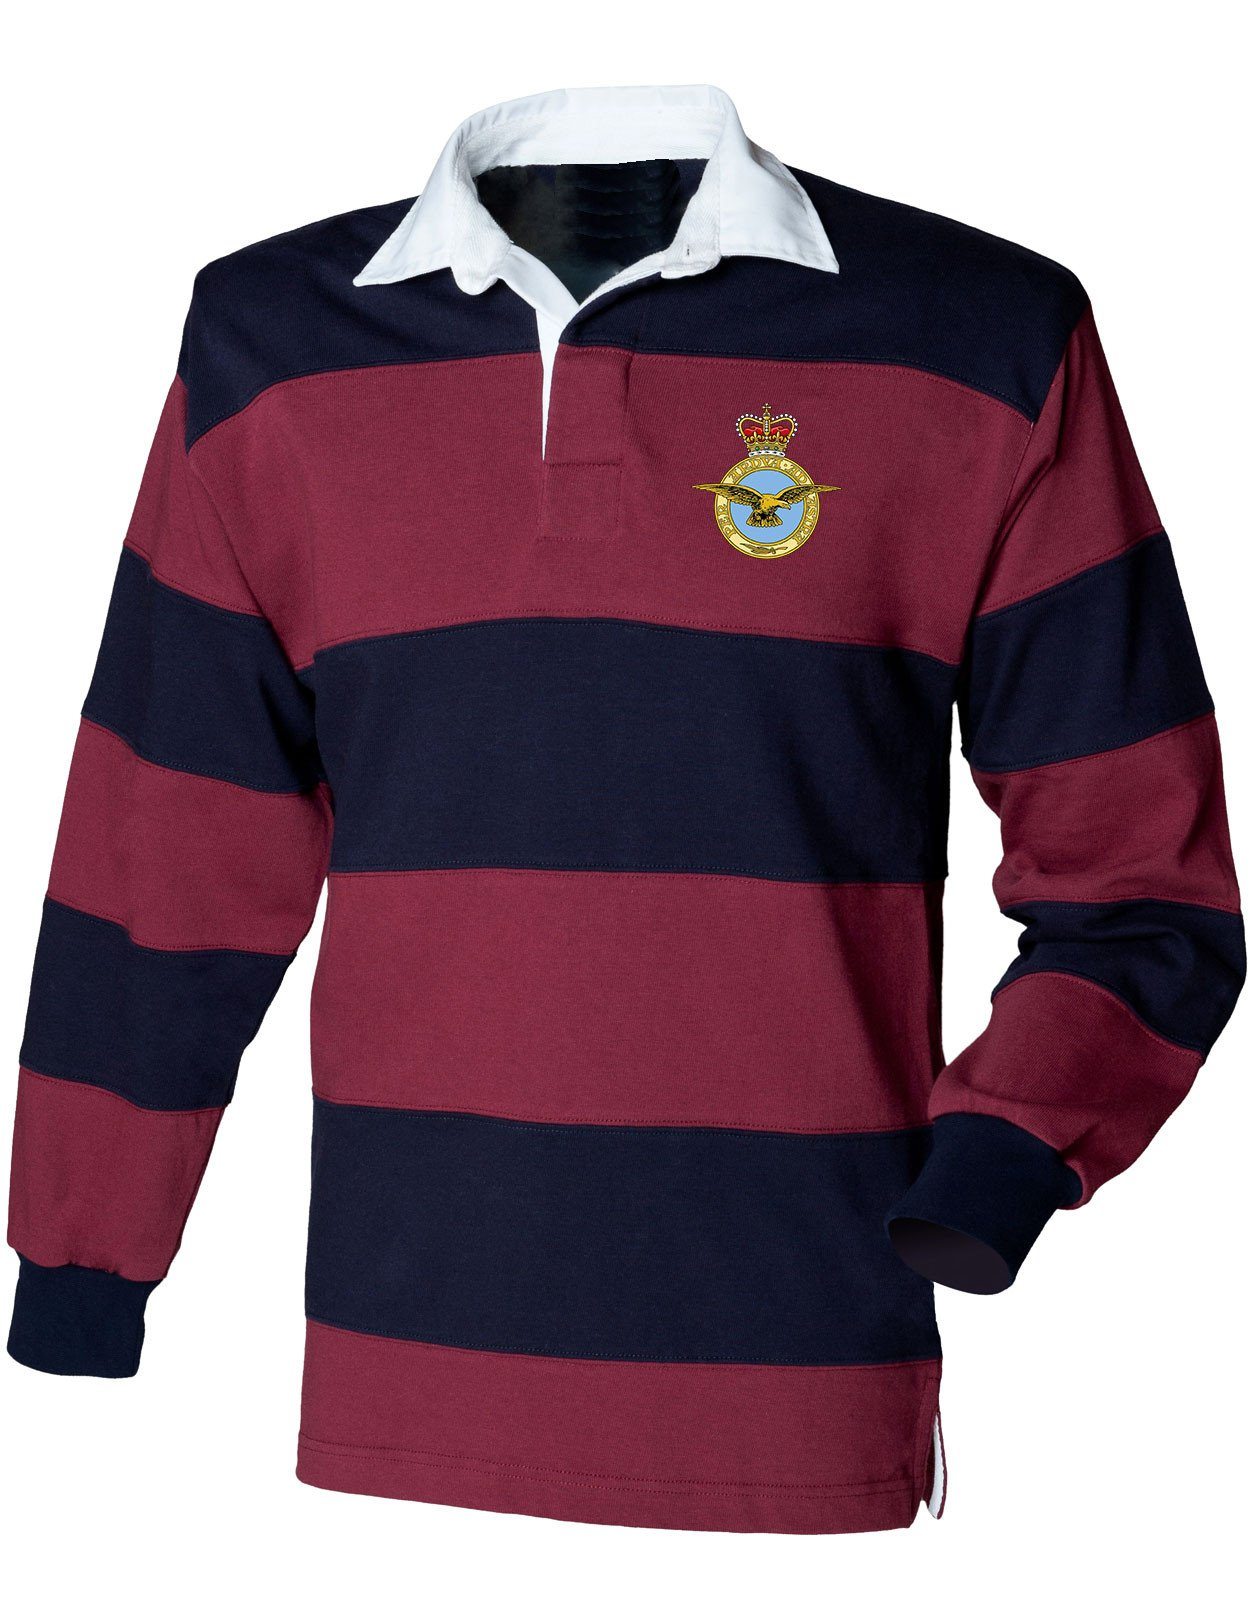 RAF (Royal Air Force) Rugby Shirt – The Regimental Shop